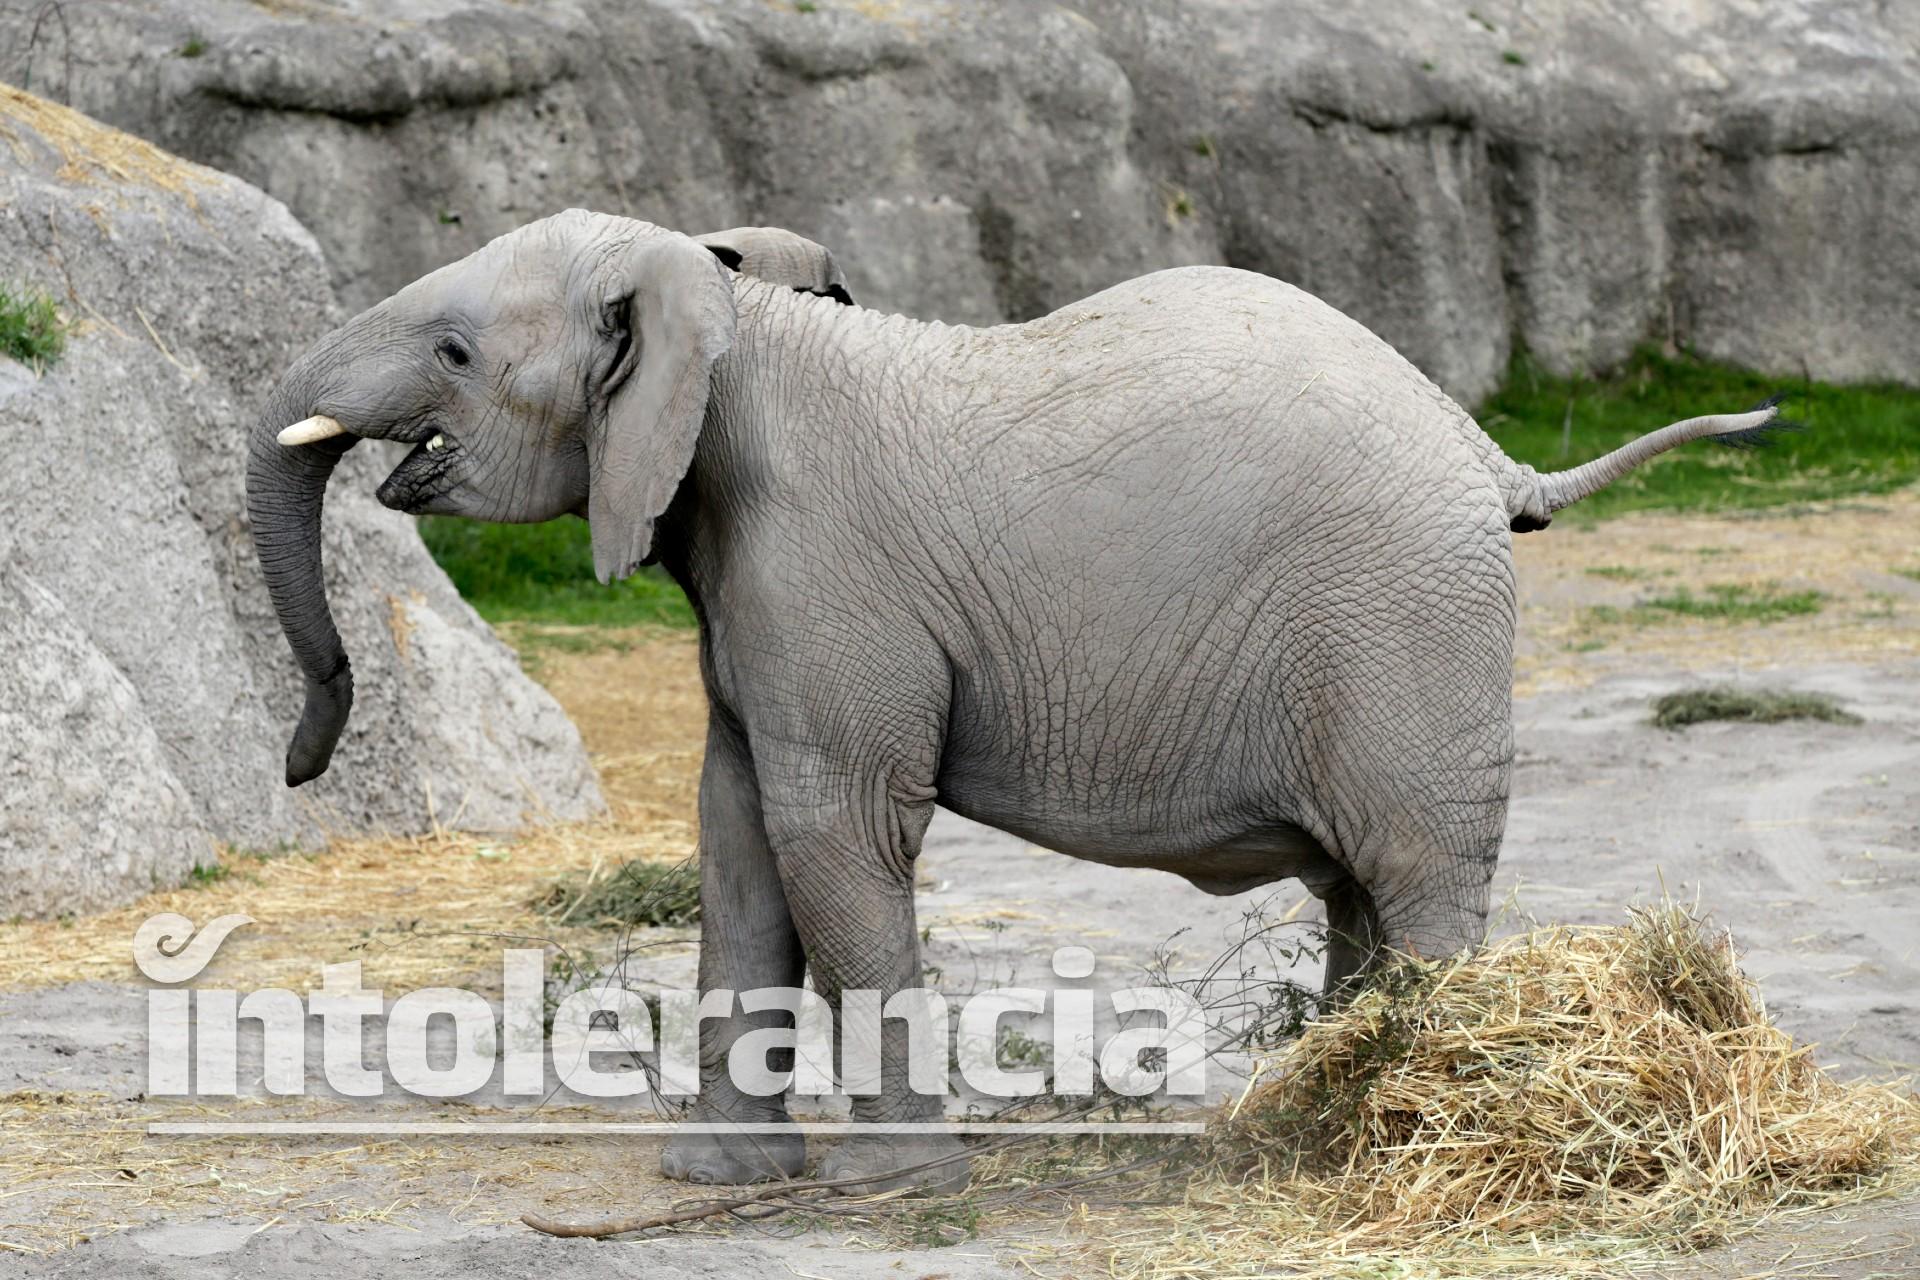 Presenta Africam Safari a "Lester", su elefante apadrinado